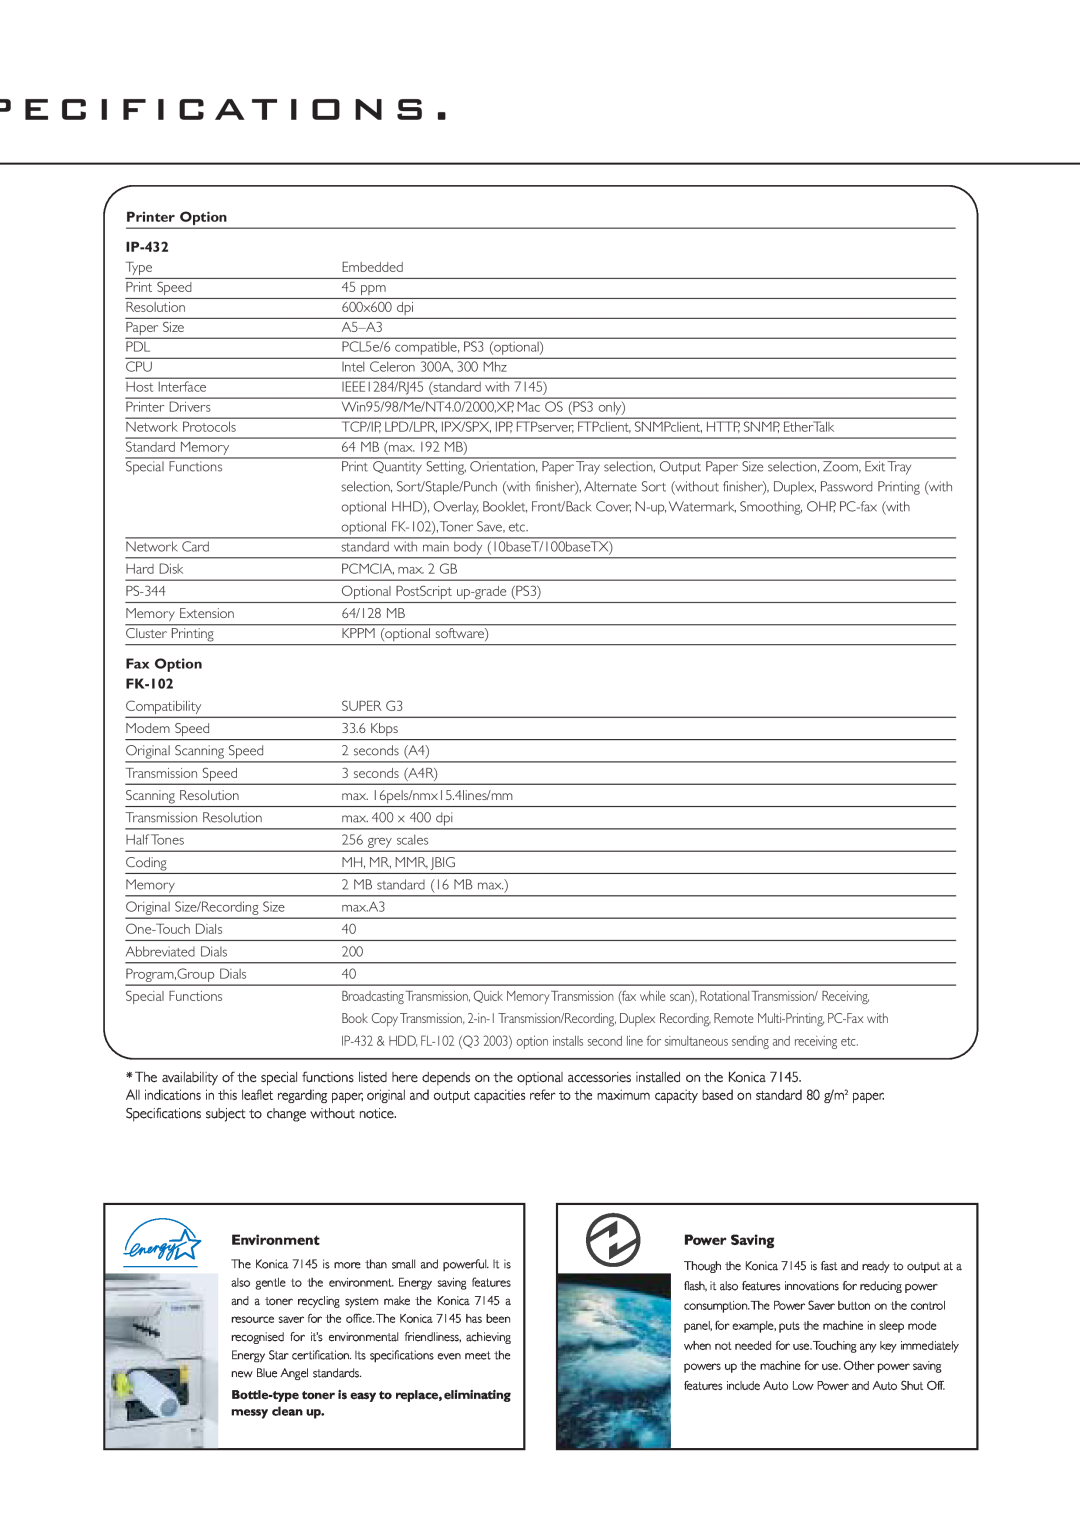 Konica Minolta 7145 manual p e c i f i c at i o n s, Printer Option, IP-432, Fax Option, FK-102, Environment, Power Saving 